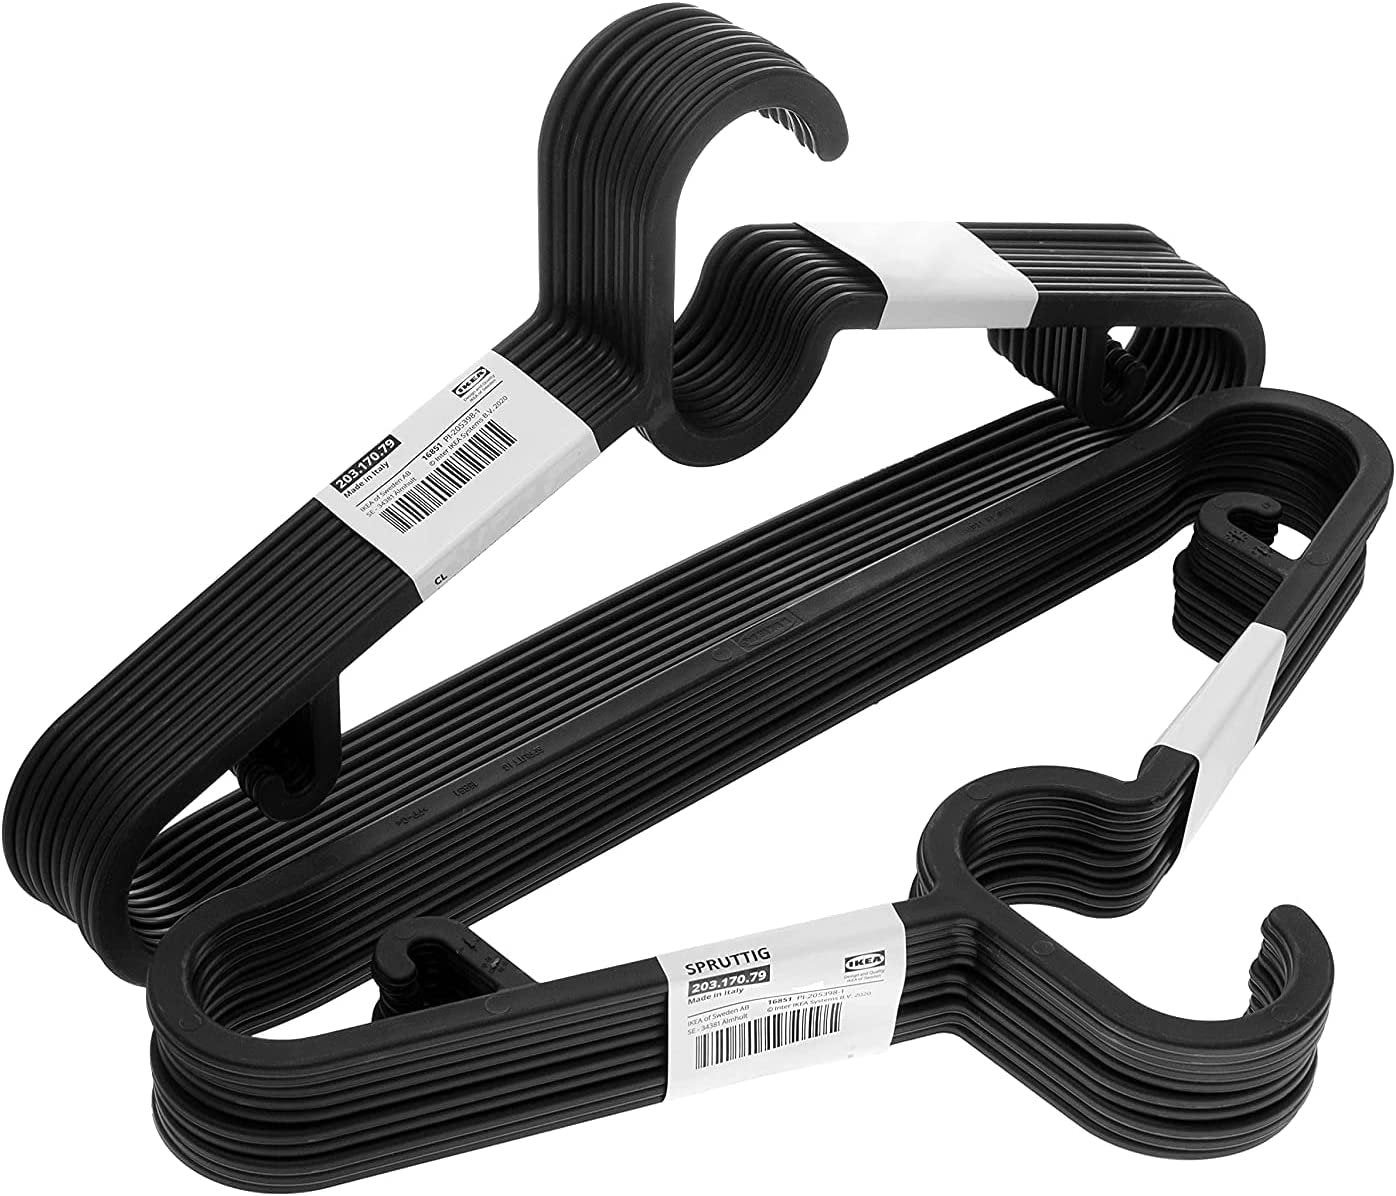 Ikea SPRUTTIG Lightweight Clothes Hangers, Black, Plastic - Set of 20, 29cm